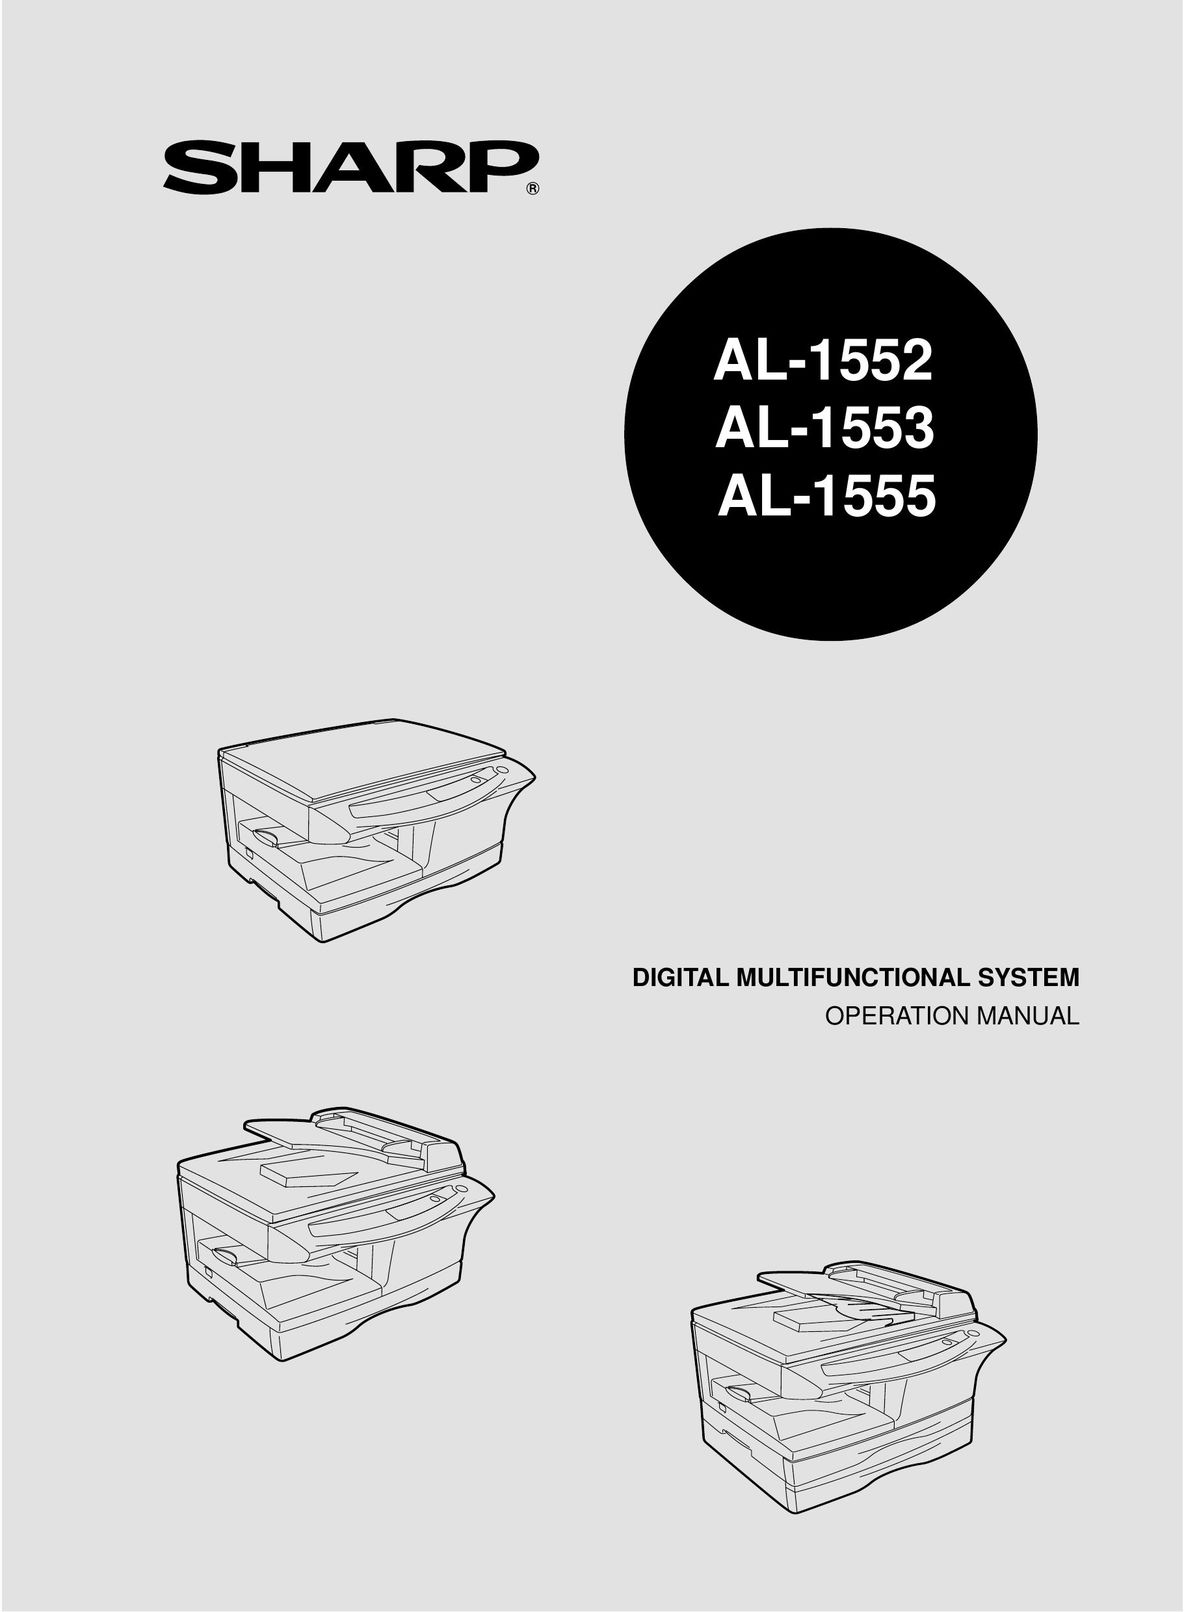 Sharp AL-1553 All in One Printer User Manual